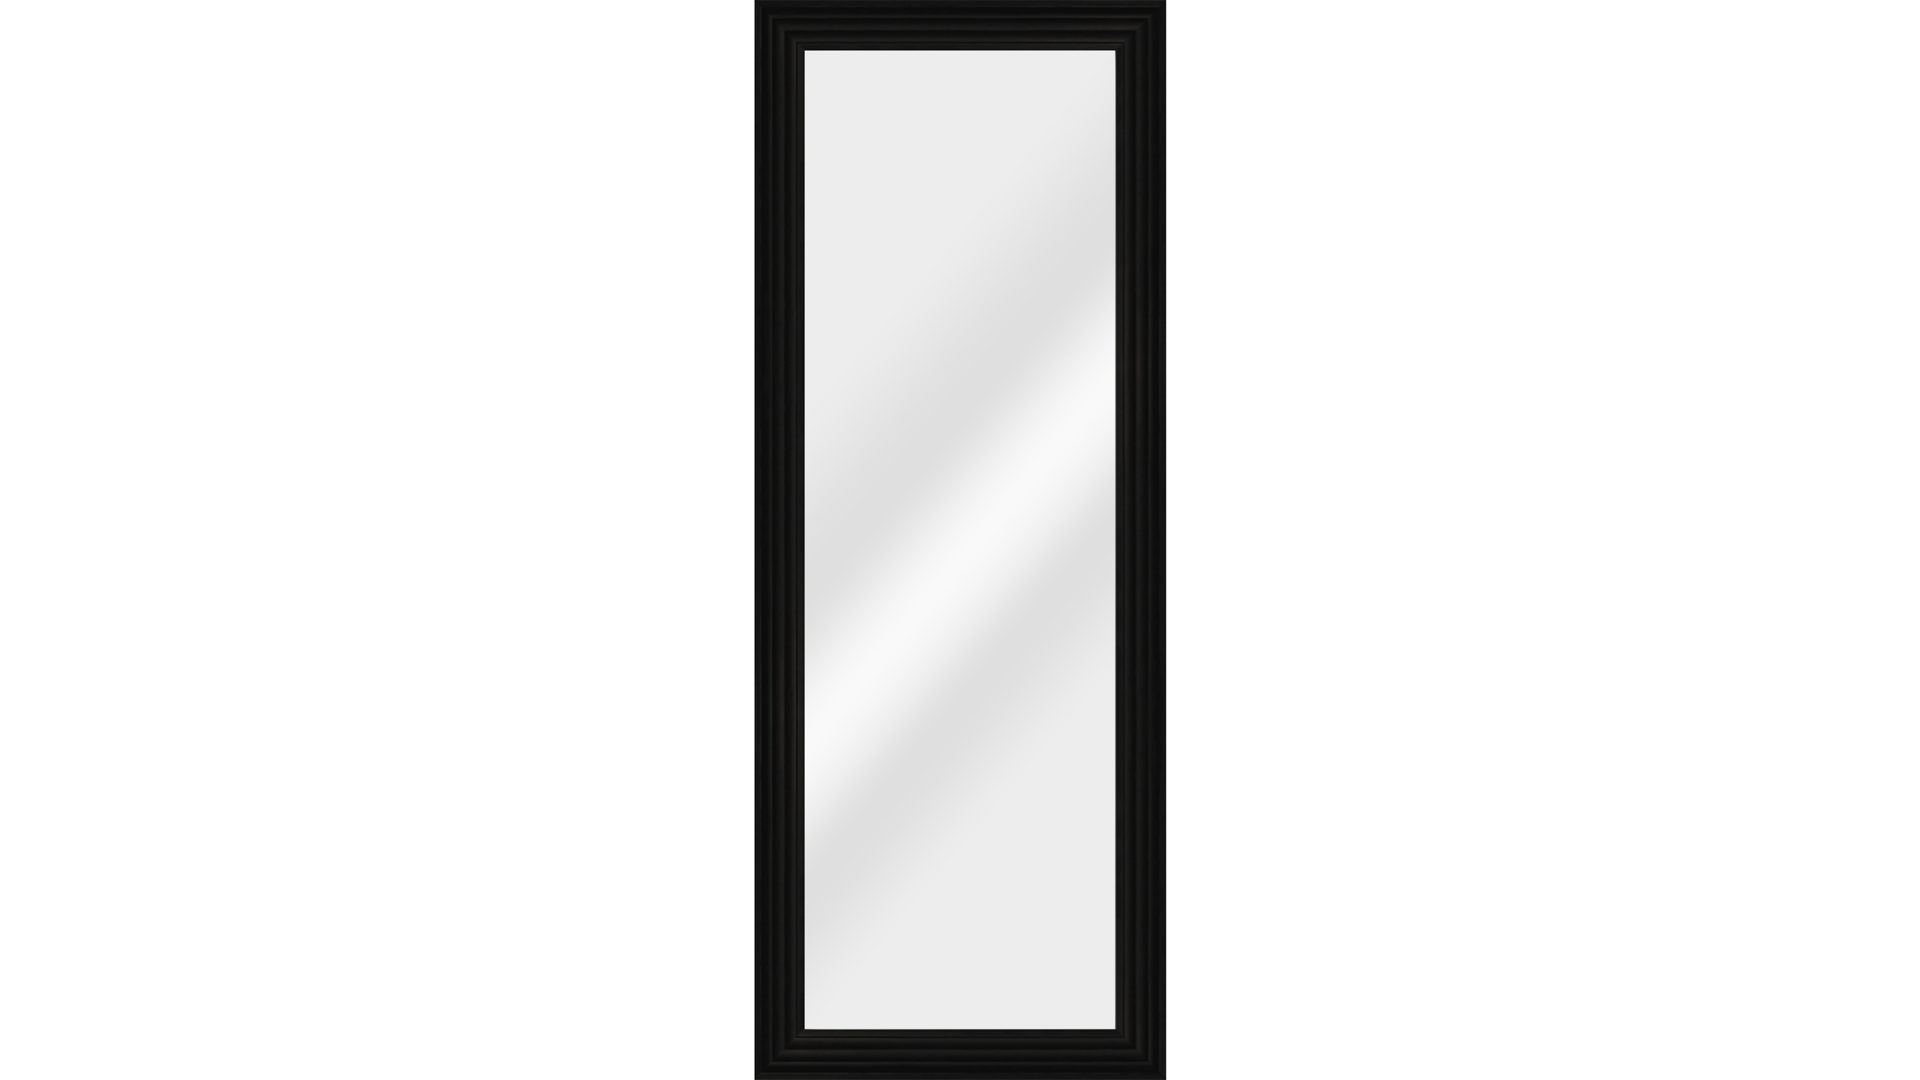 Wandspiegel Len-fra aus Kunststoff Spiegel in Schwarz LEN-FRA Wandspiegel Garderobenspiegel 91-1181 schwarzer Lackrahmen - ca. 56 x 146 cm